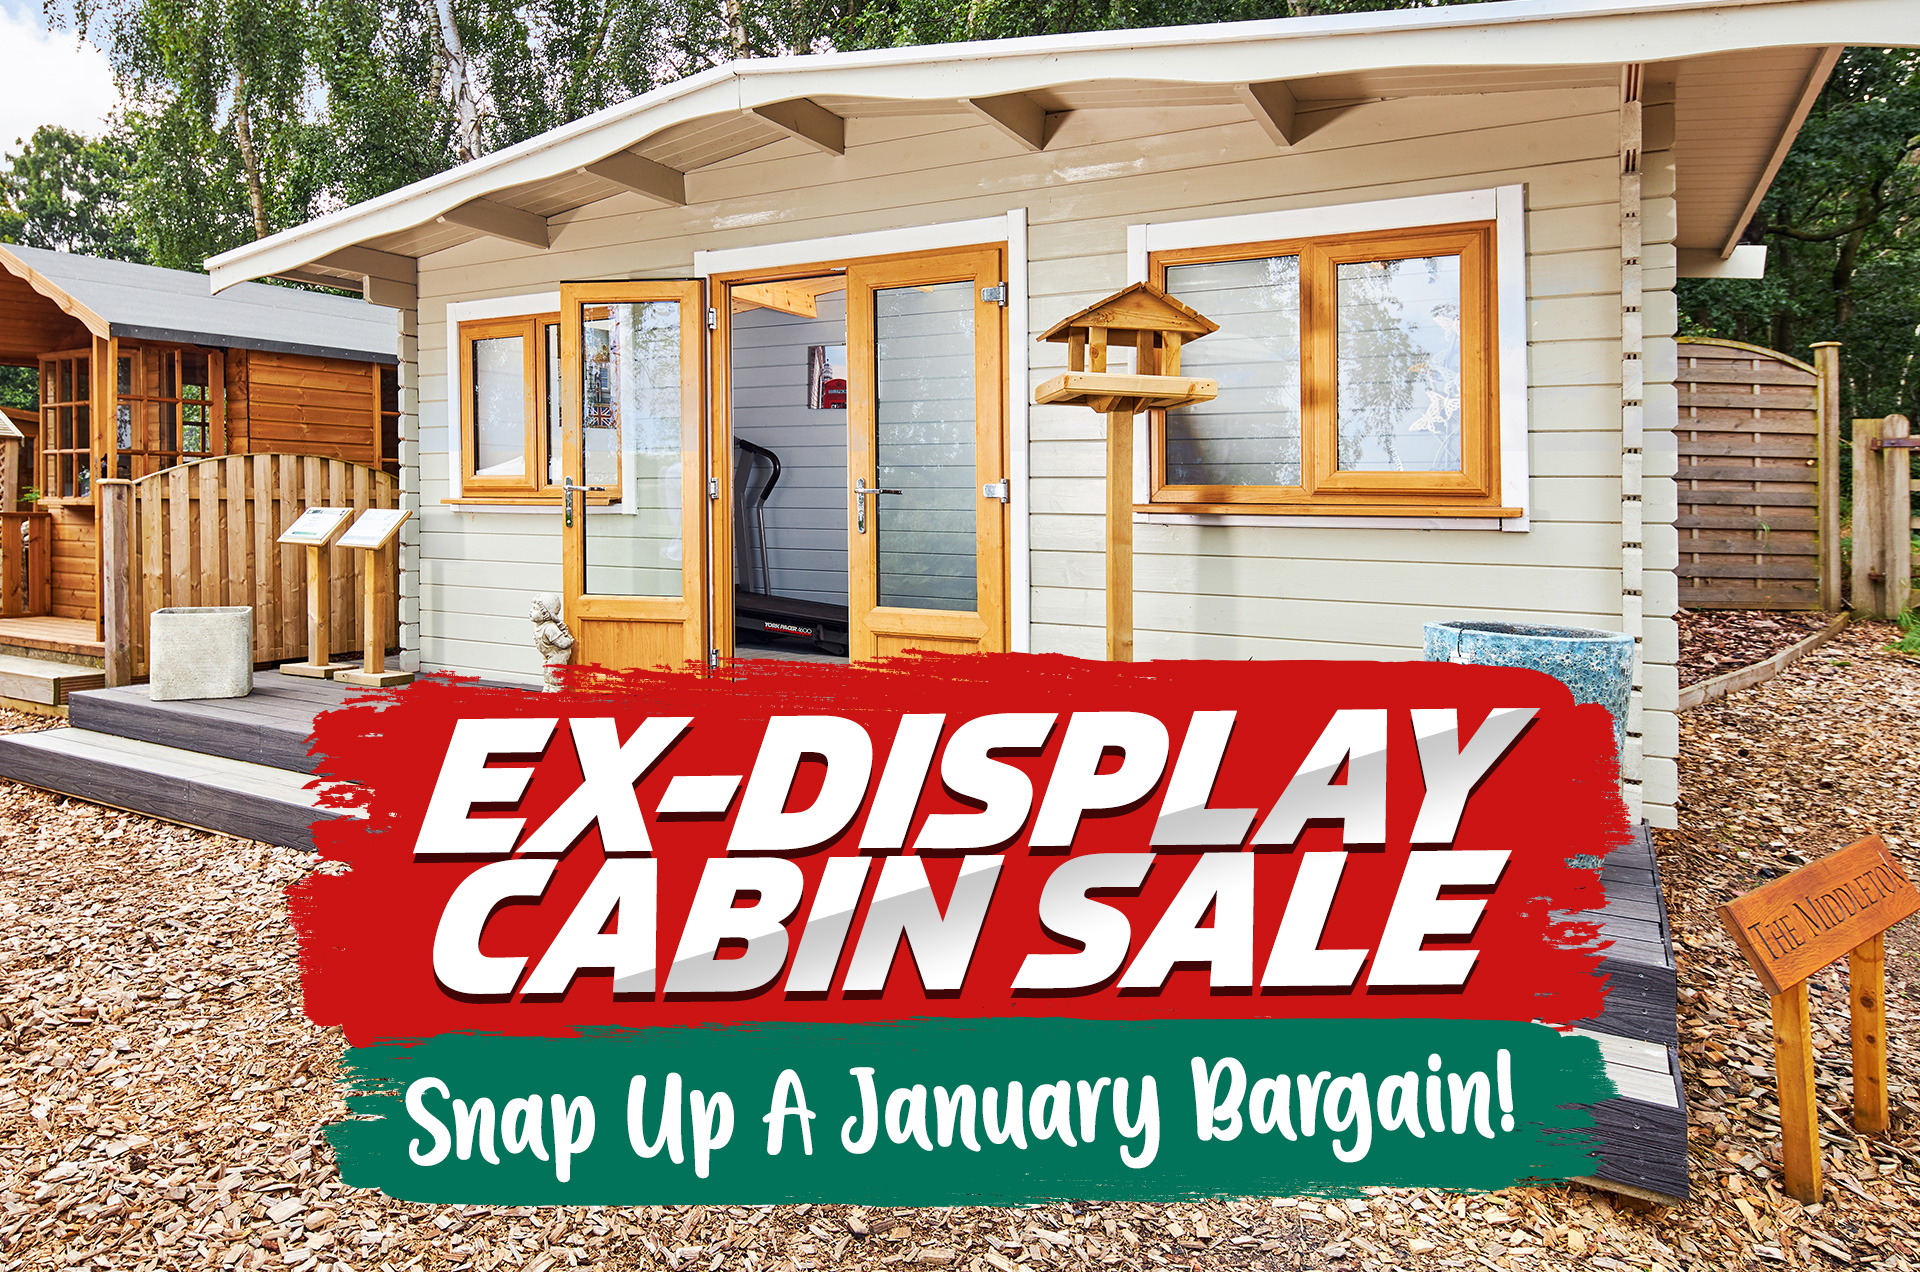 Ex display cabin sale